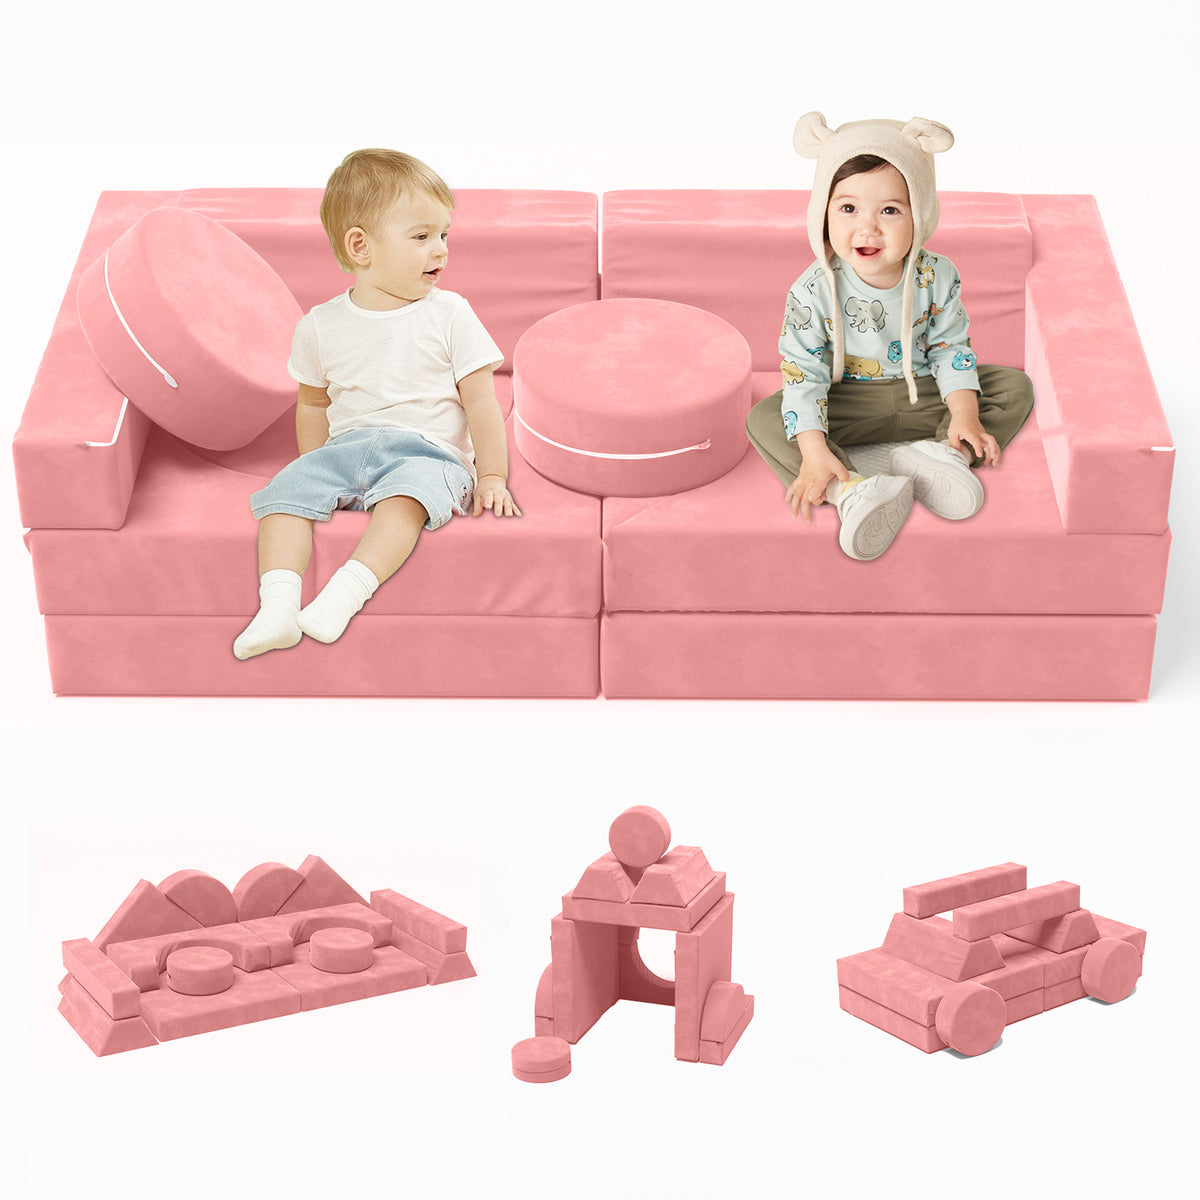 XJD 14-Piece Modular Children's Play Sofa, Children's Combination Sofa, Bedroom and Playroom Children's Furniture, Convertible Foam and Floor Cushions, Pink